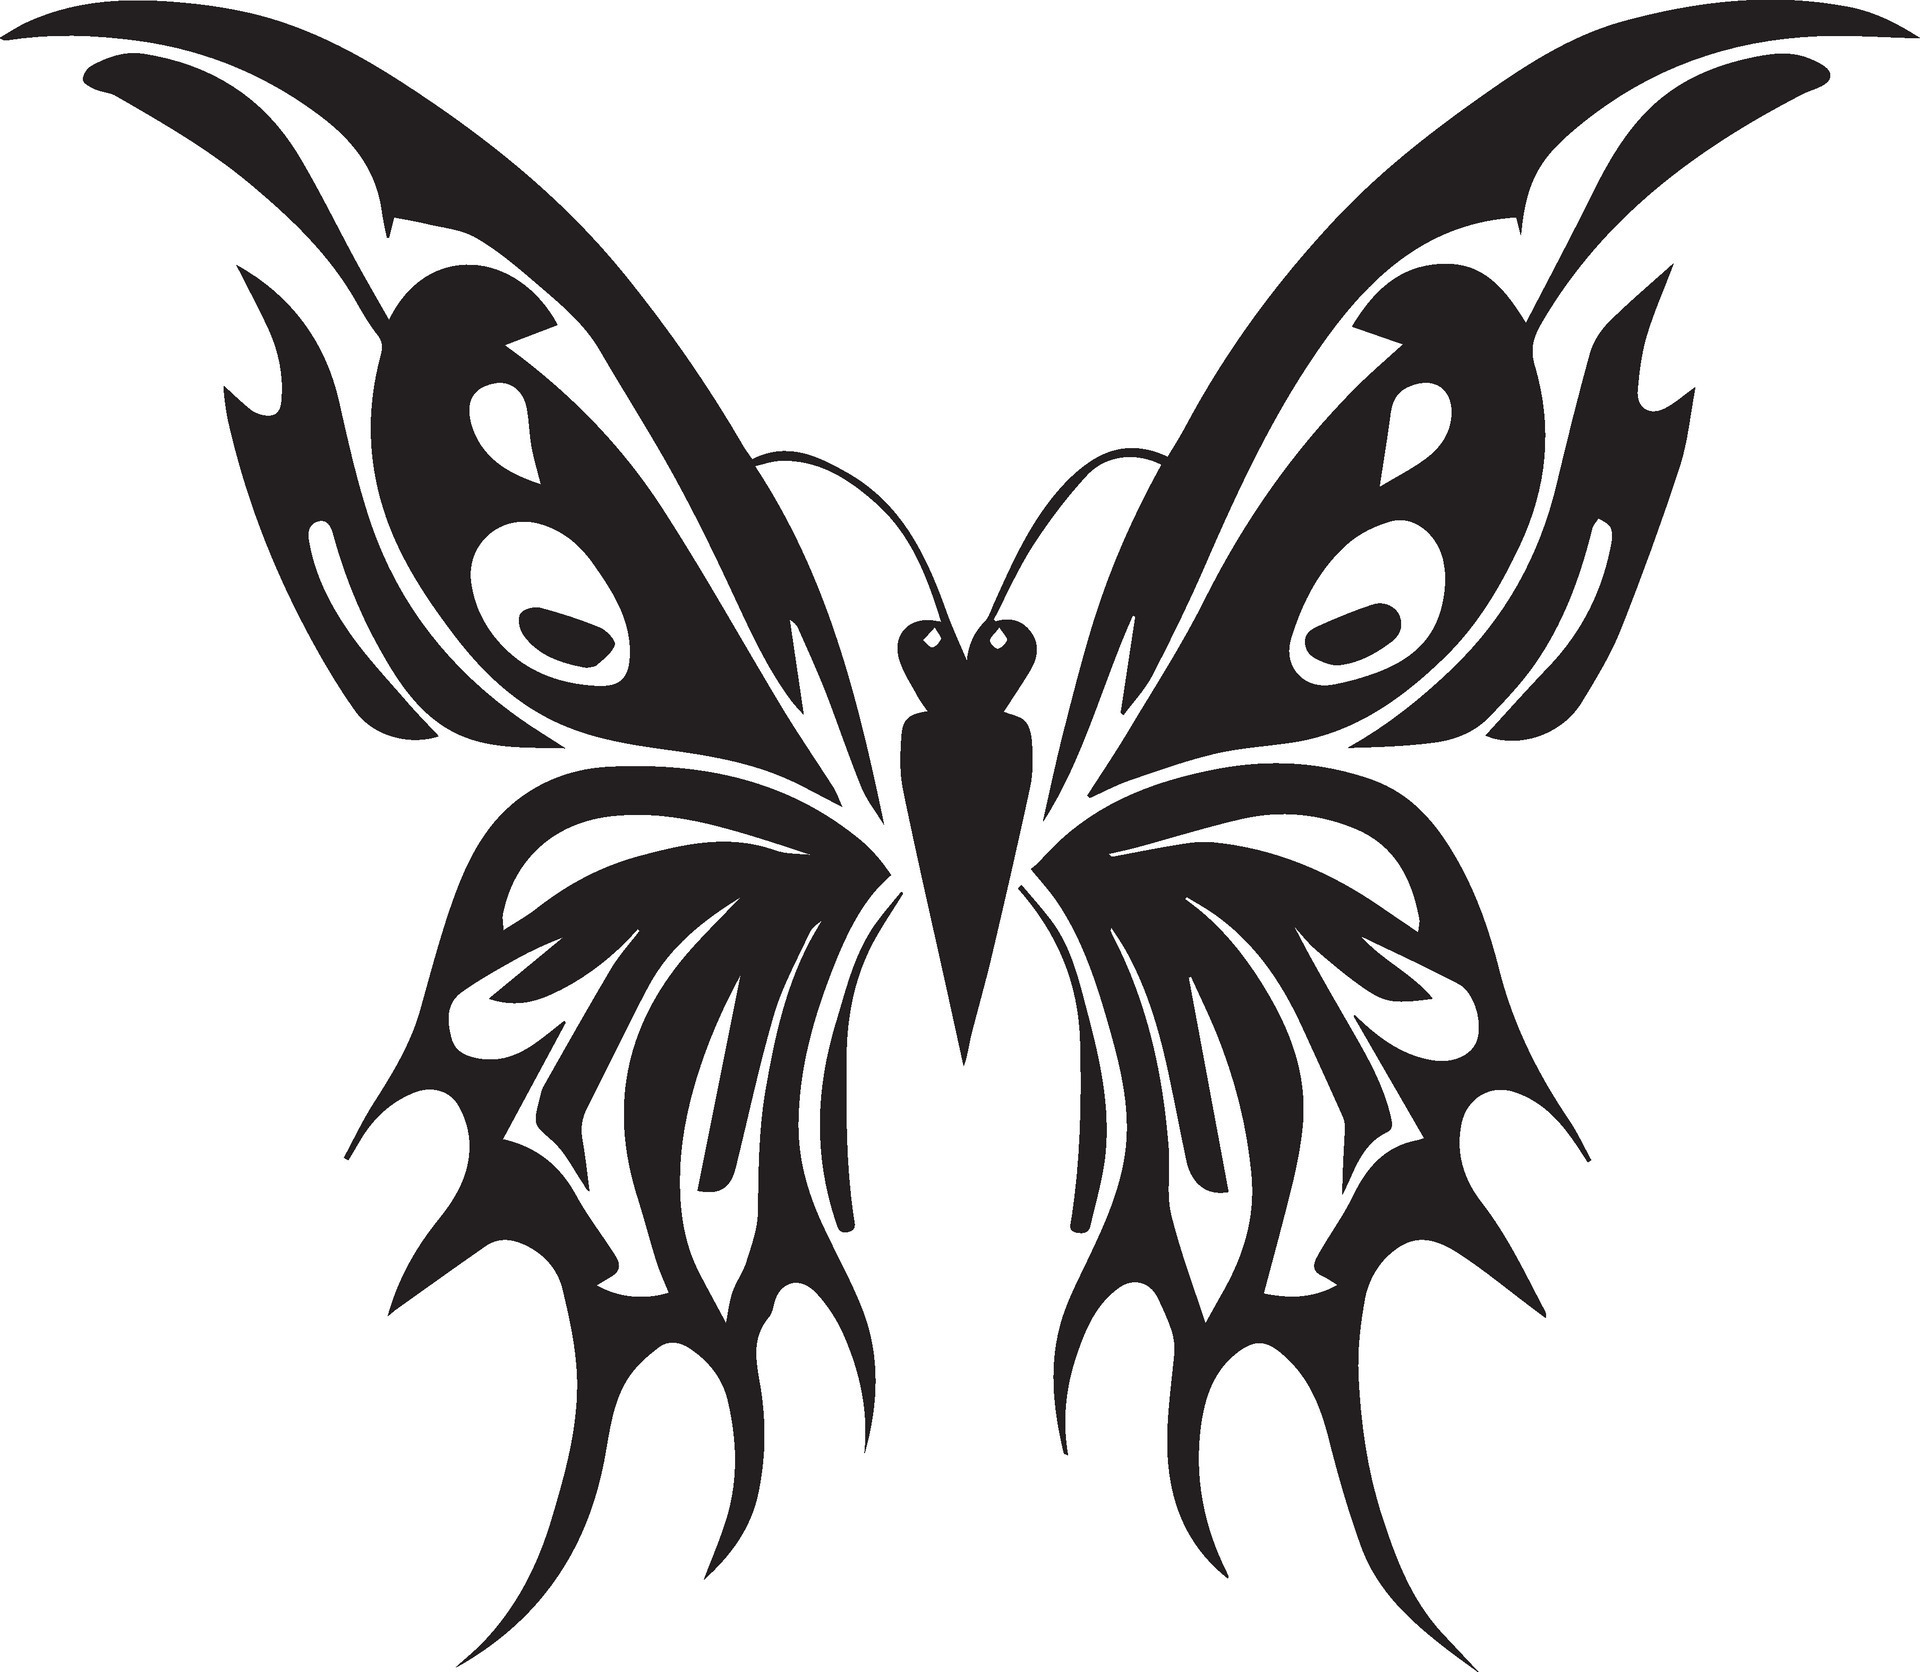 Butterfly vector tattoo design illustration 26518084 Vector Art at Vecteezy